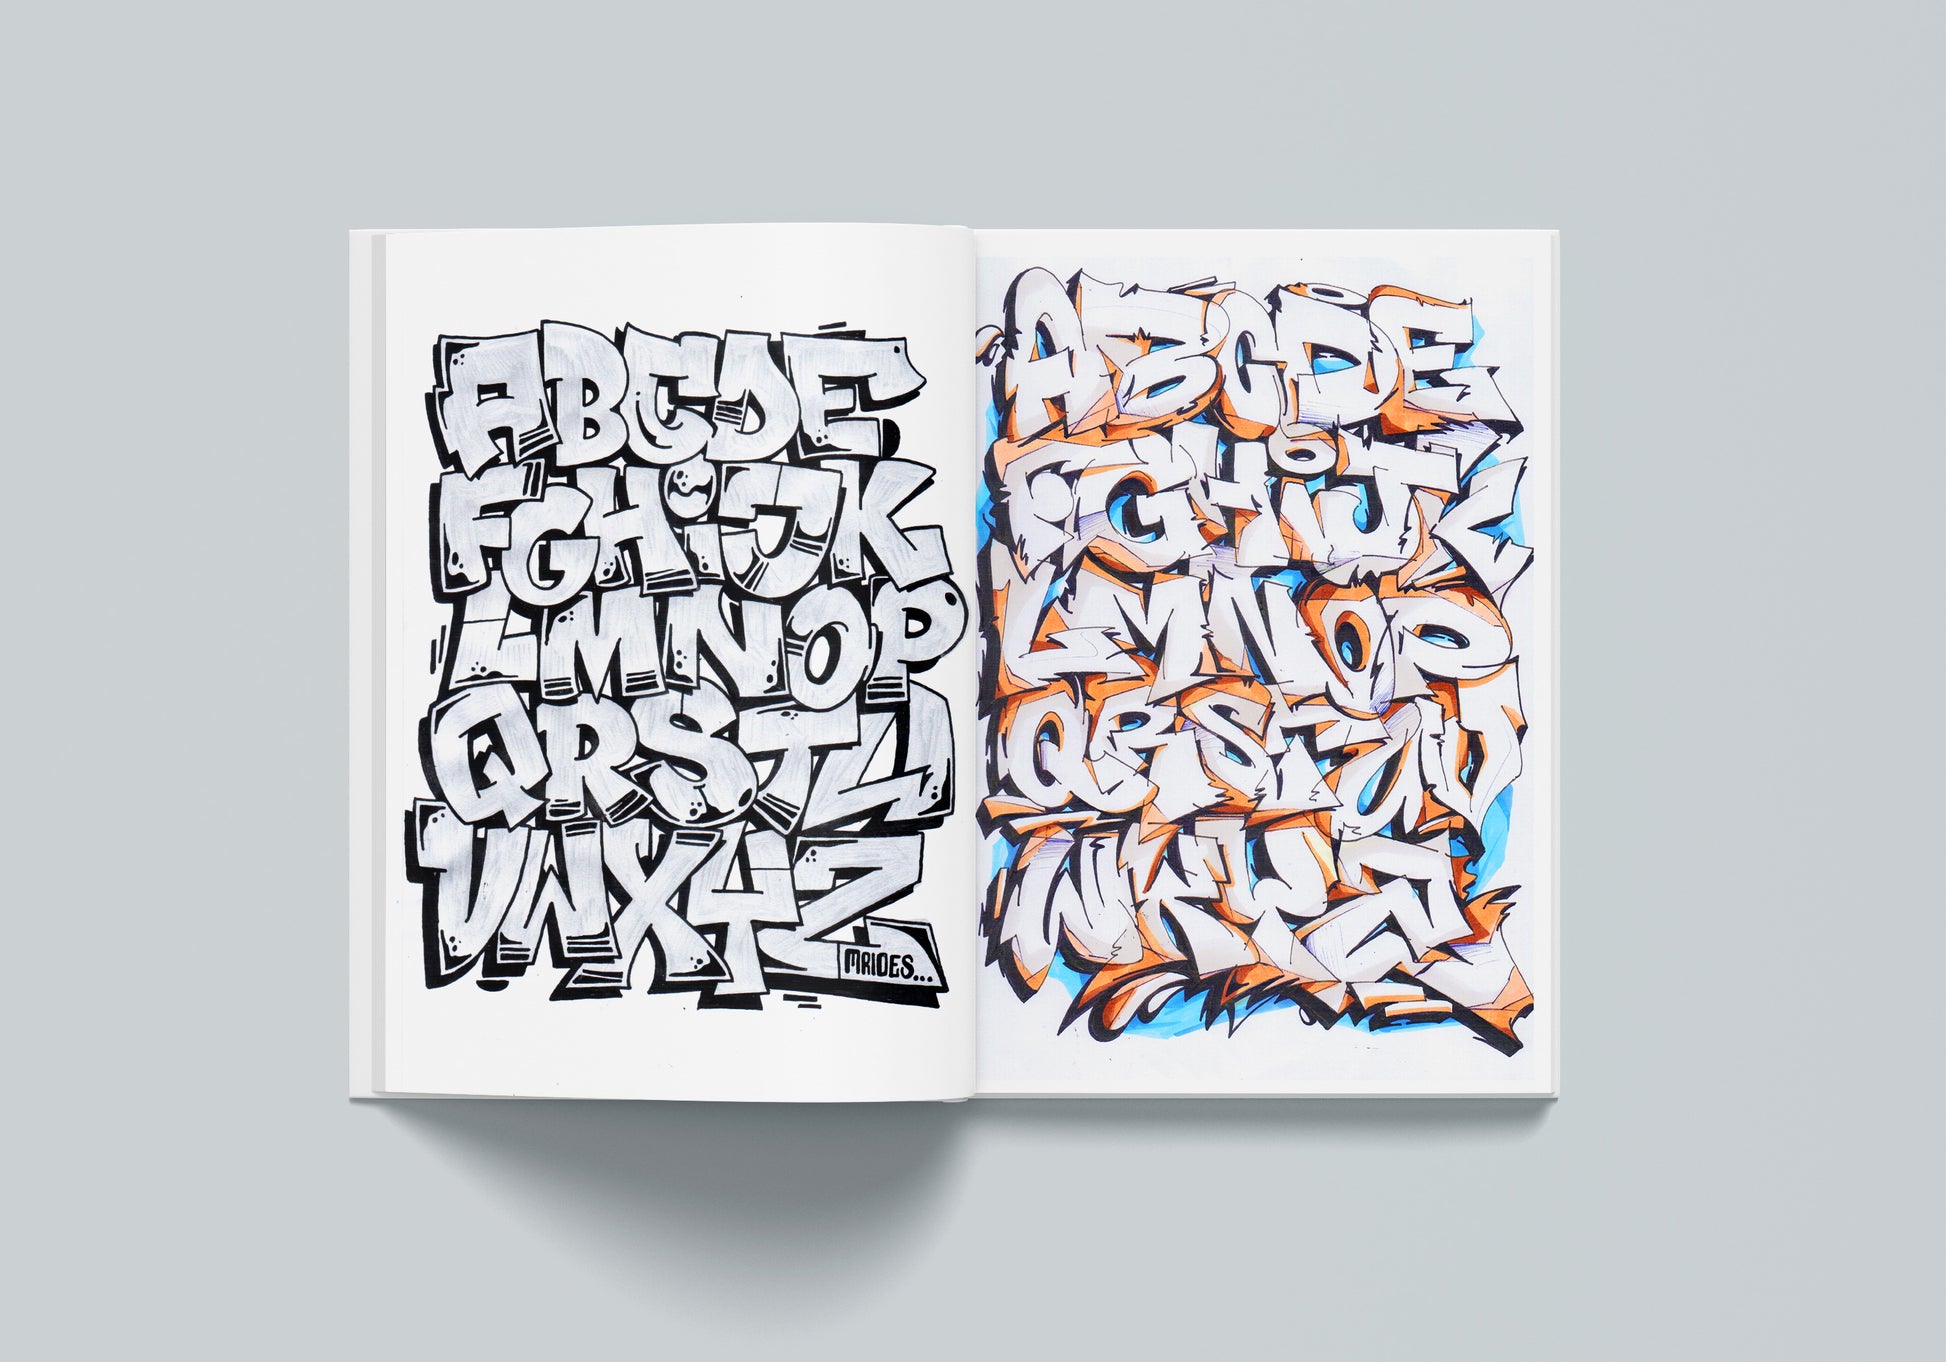 graffiti alphabets book